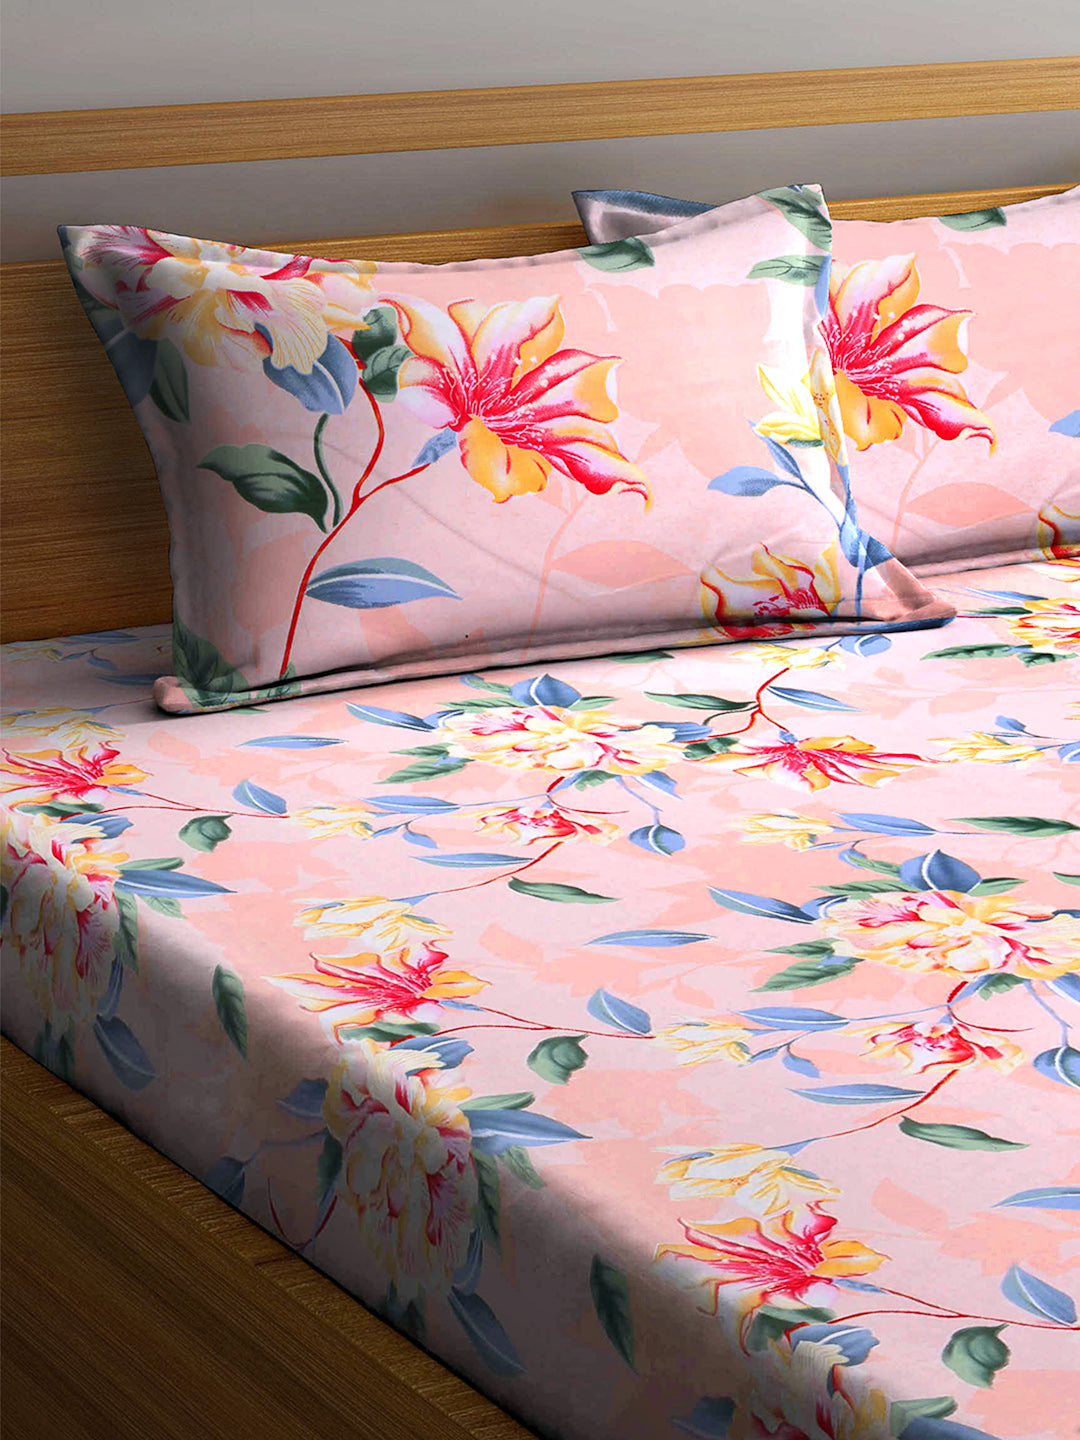 Arrabi Peach Floral TC Cotton Blend King Size Bedsheet with 2 Pillow Covers (250 x 220 cm)